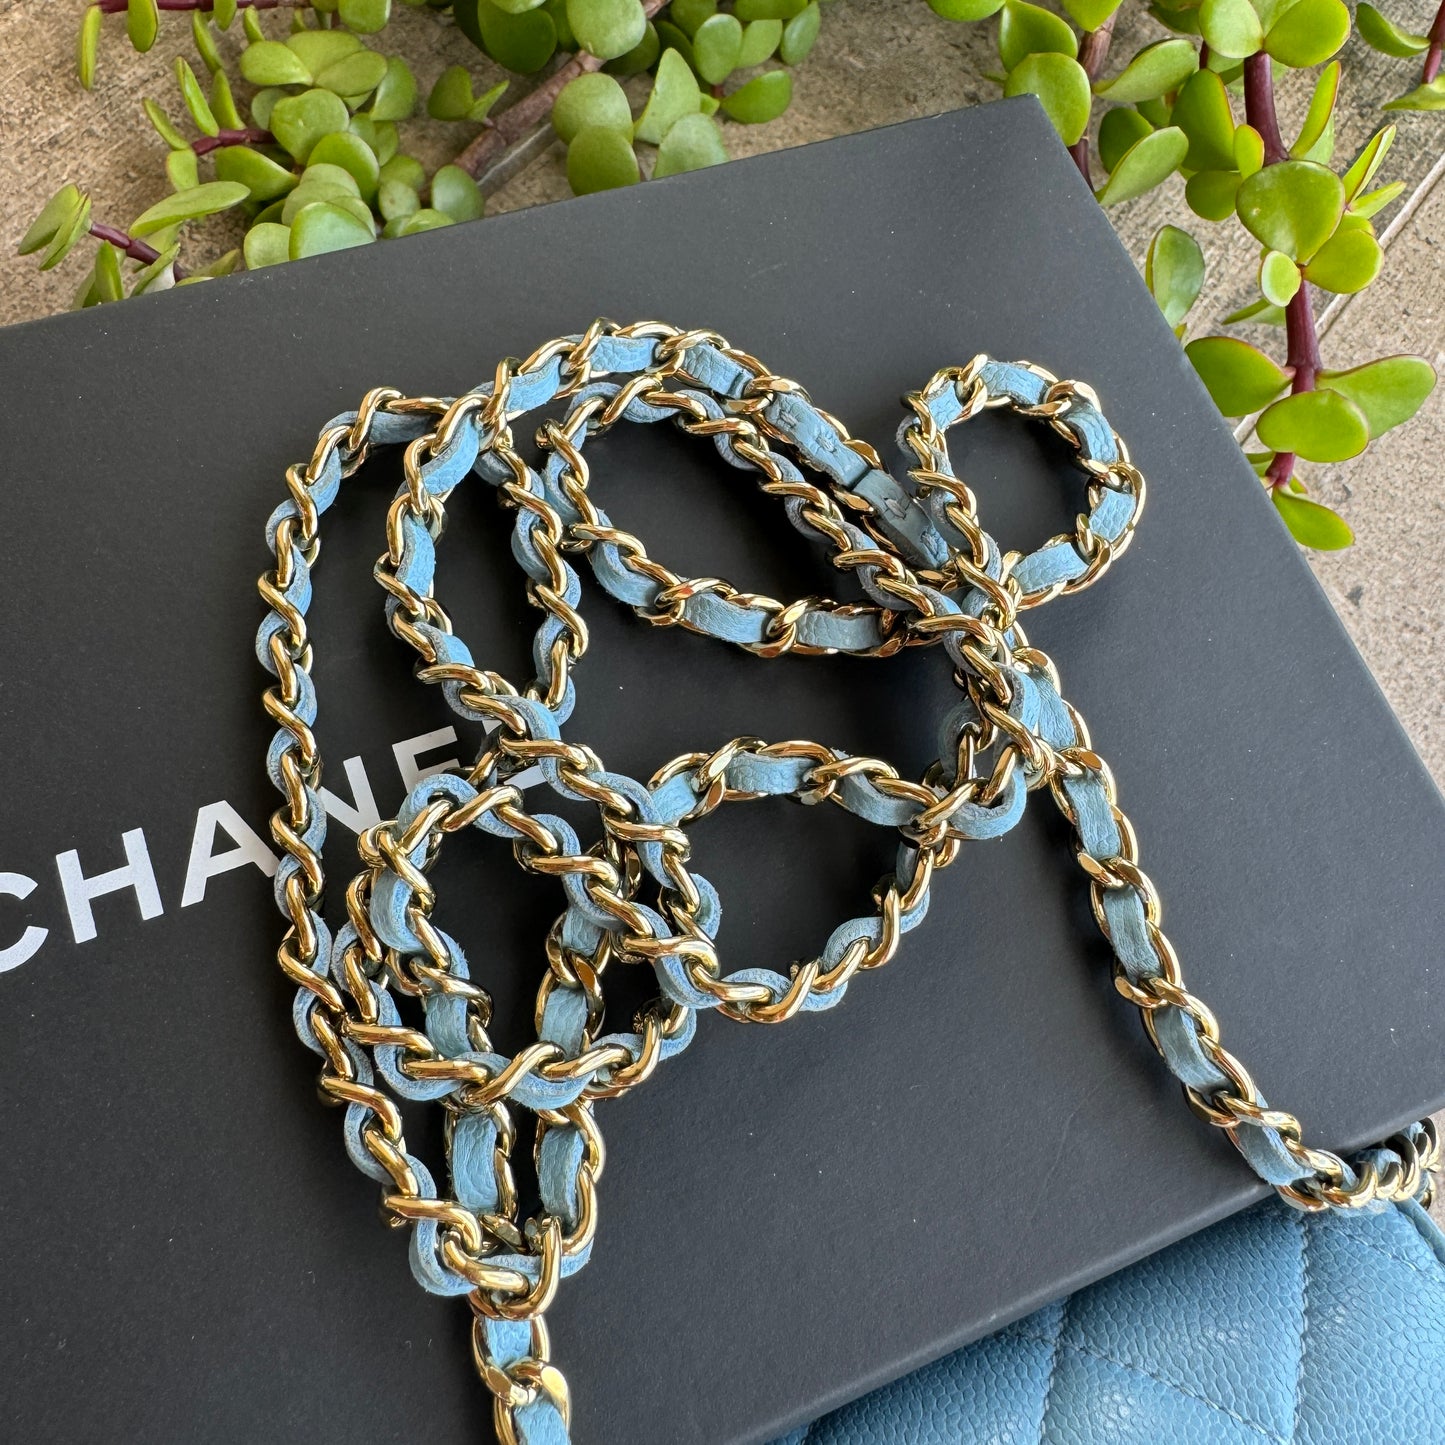 Chanel Classic Caviar WOC Wallet On Chain Crossbody